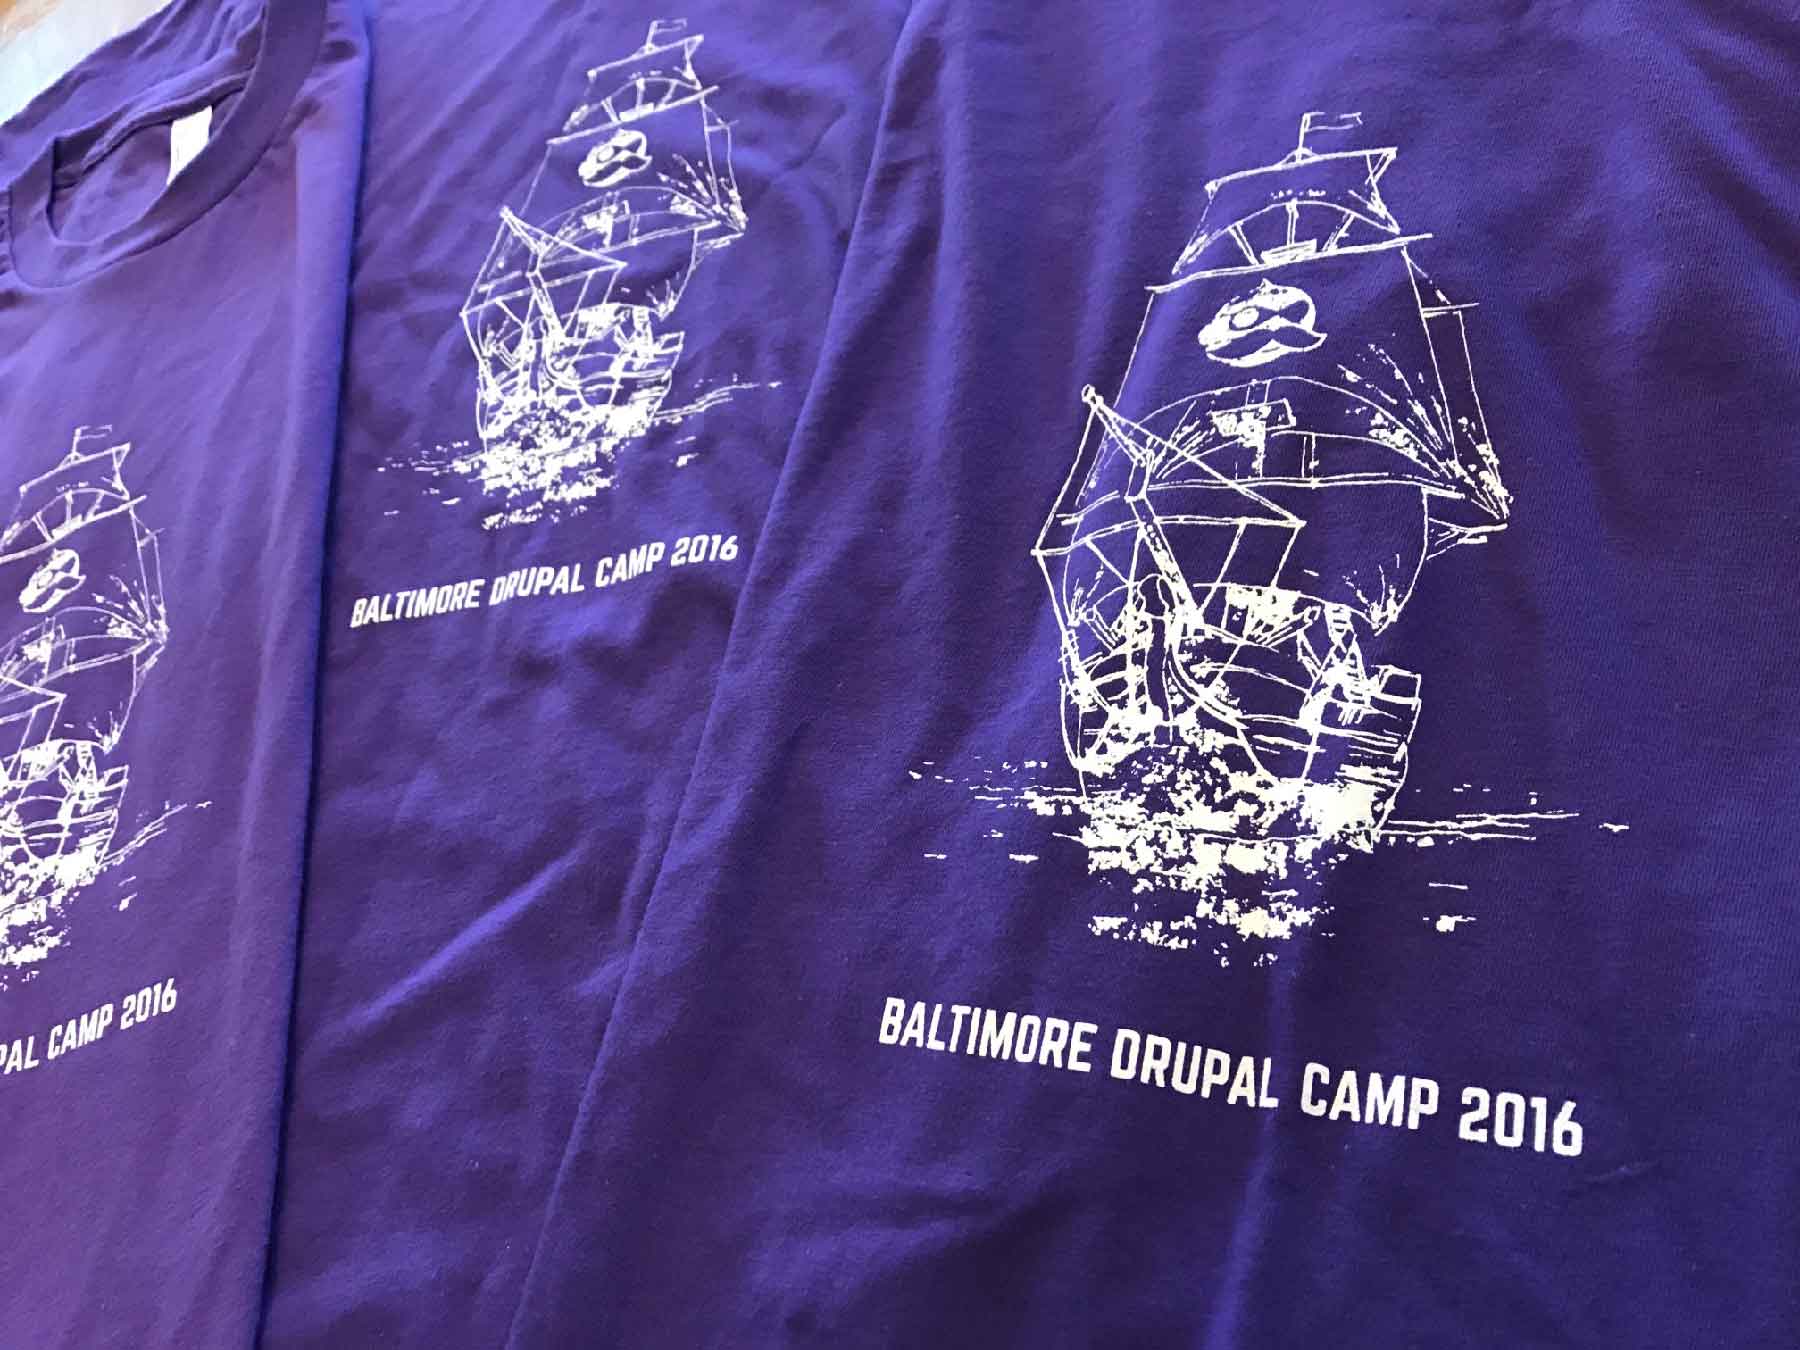 Baltimore Drupal Camp shirts with historic ship drawing